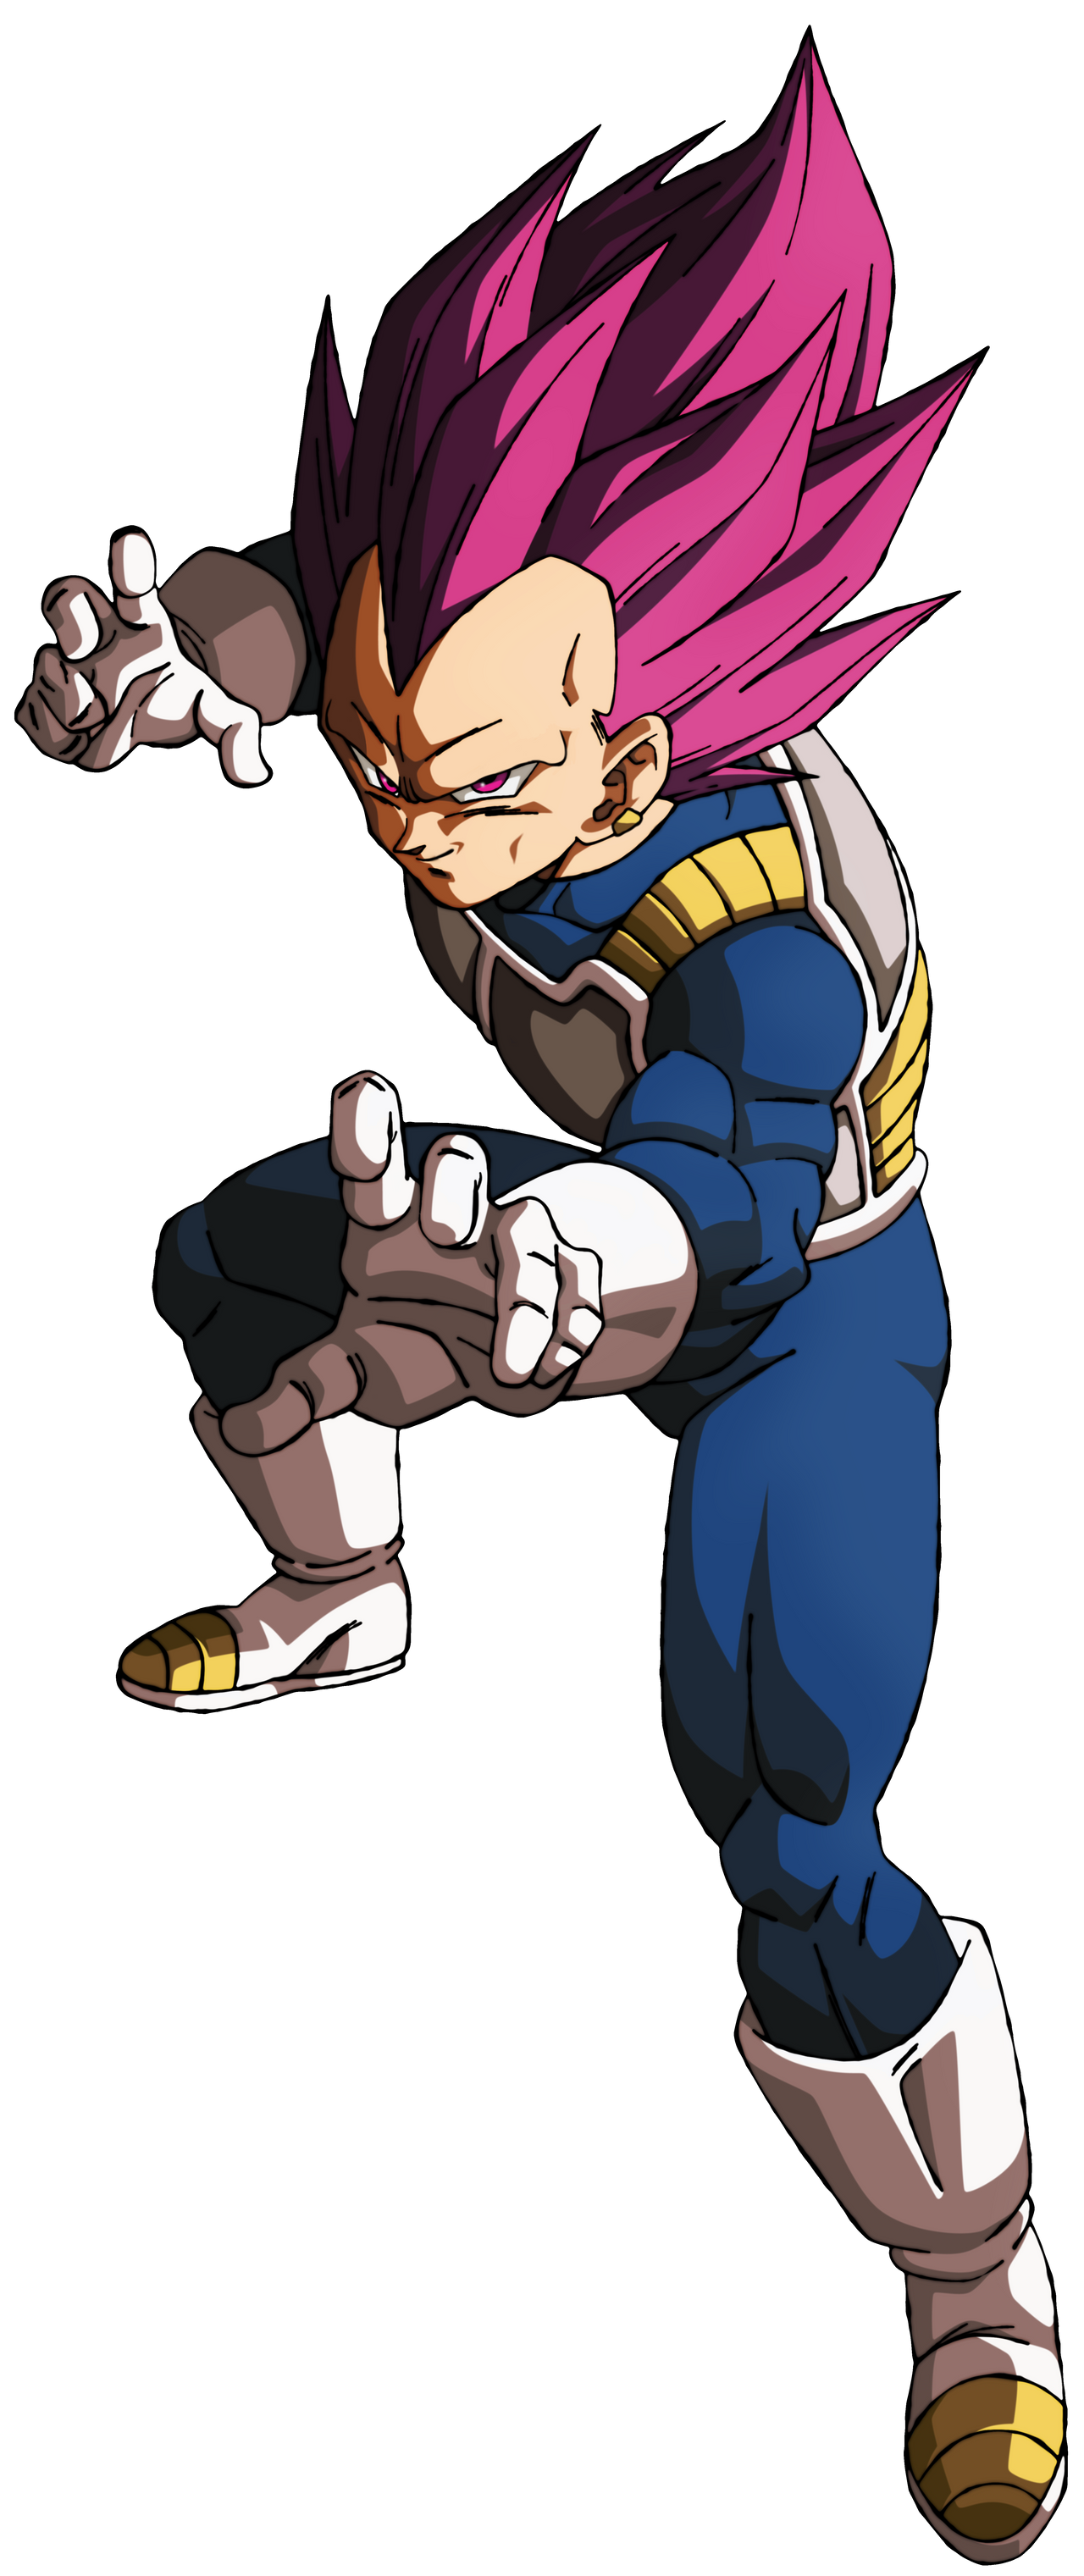 Goku Super Saiyan Power Up! by DragonBallAffinity on DeviantArt